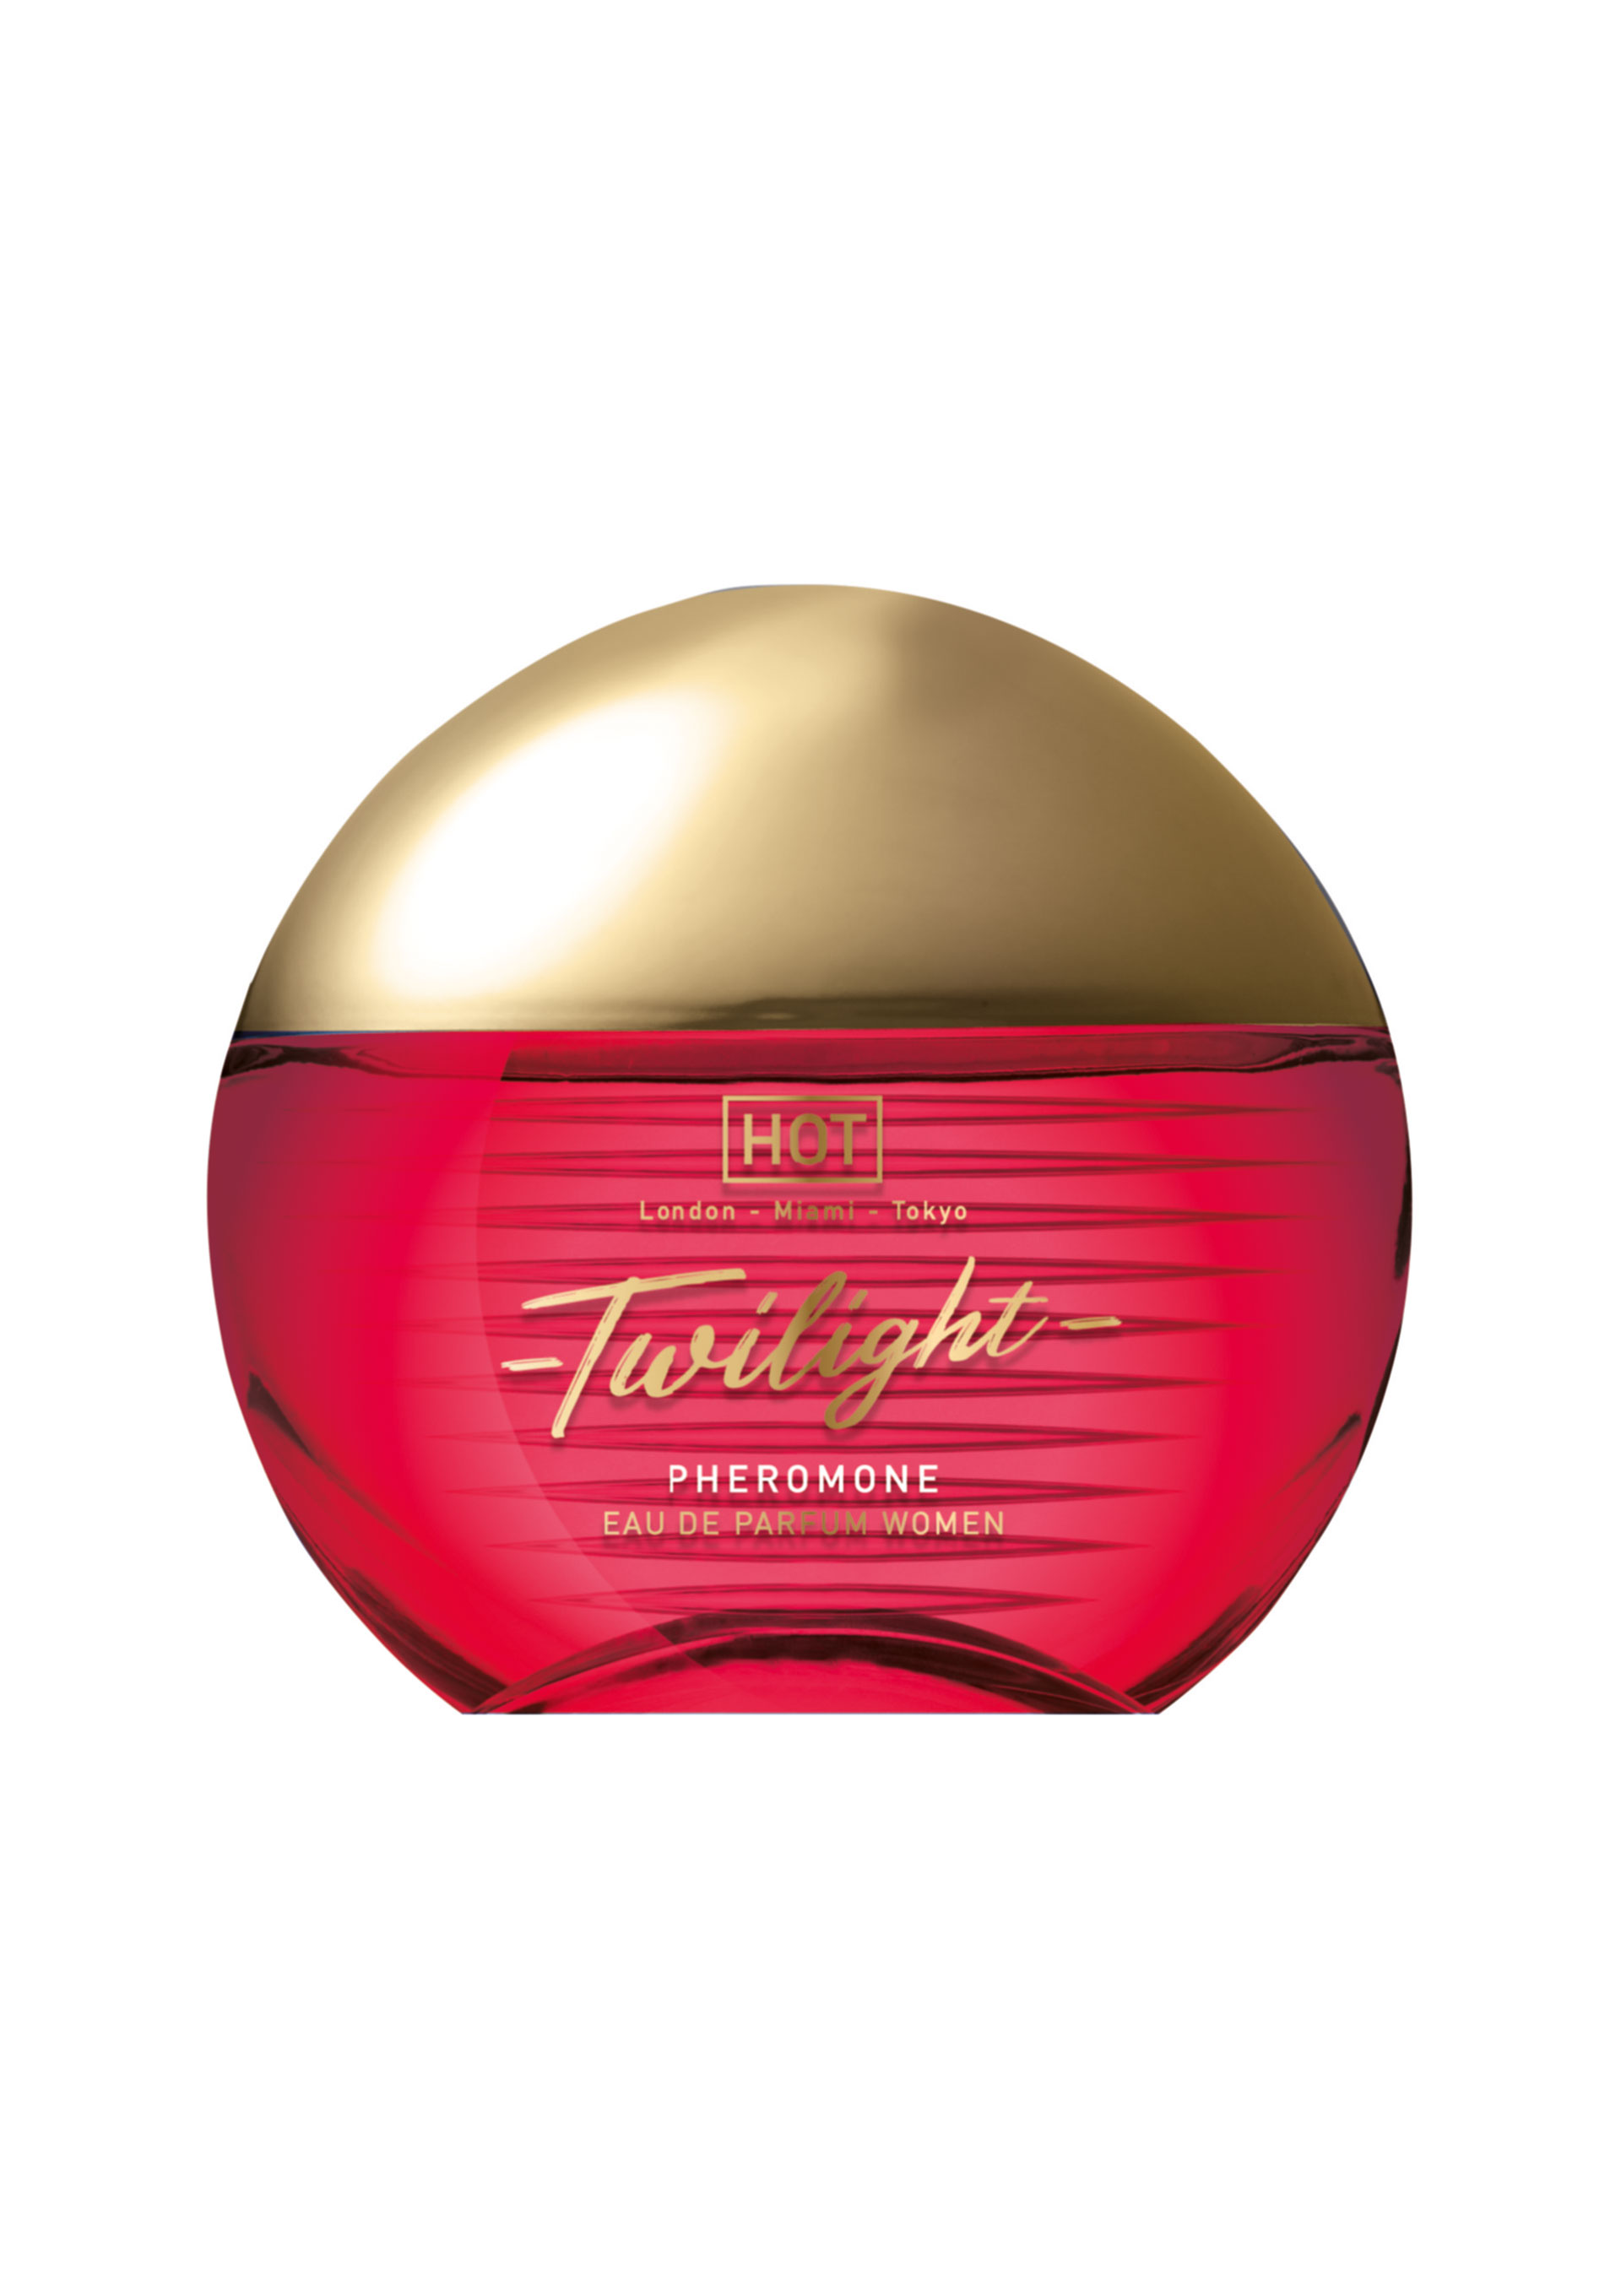 HOT Twilight Pheromone Parfum women 15ml.